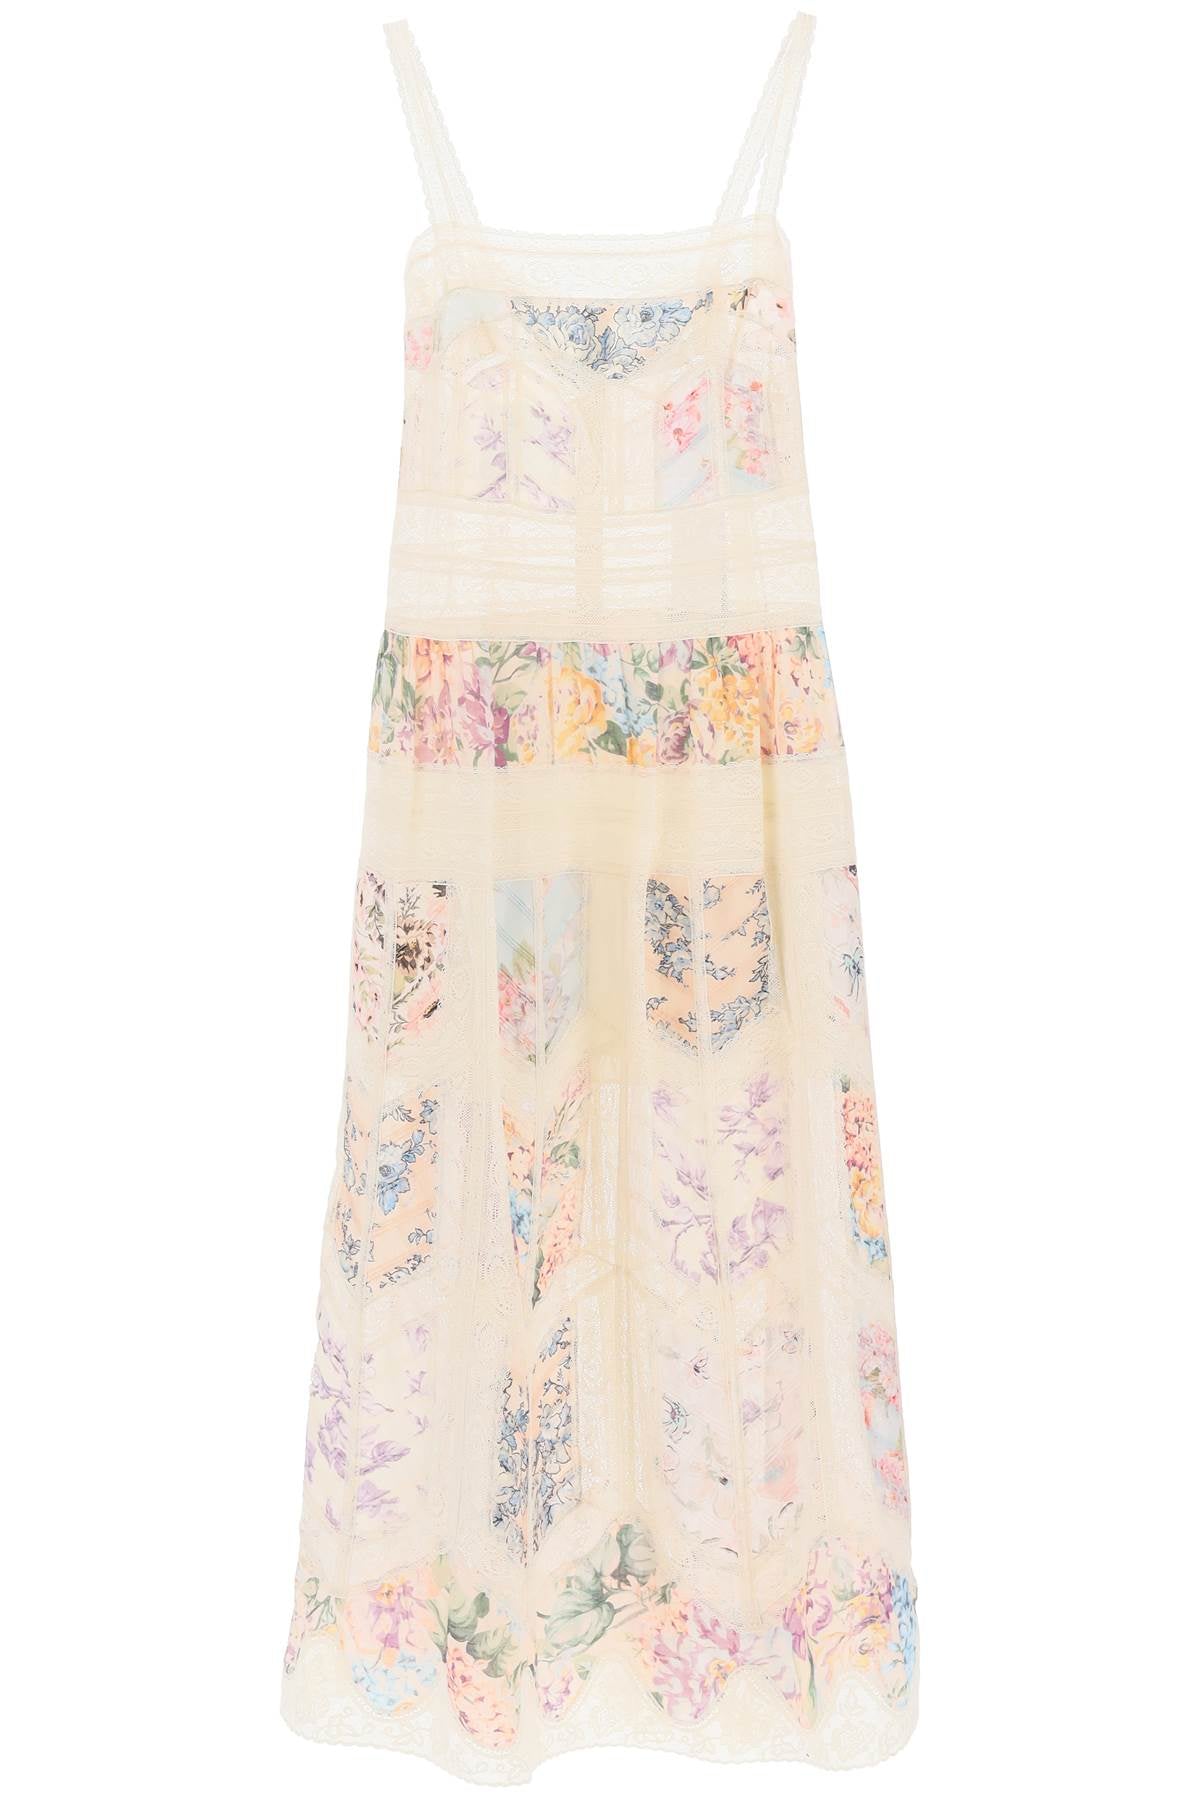 ZIMMERMANN Multicolor Floral Dress with Lace Trim